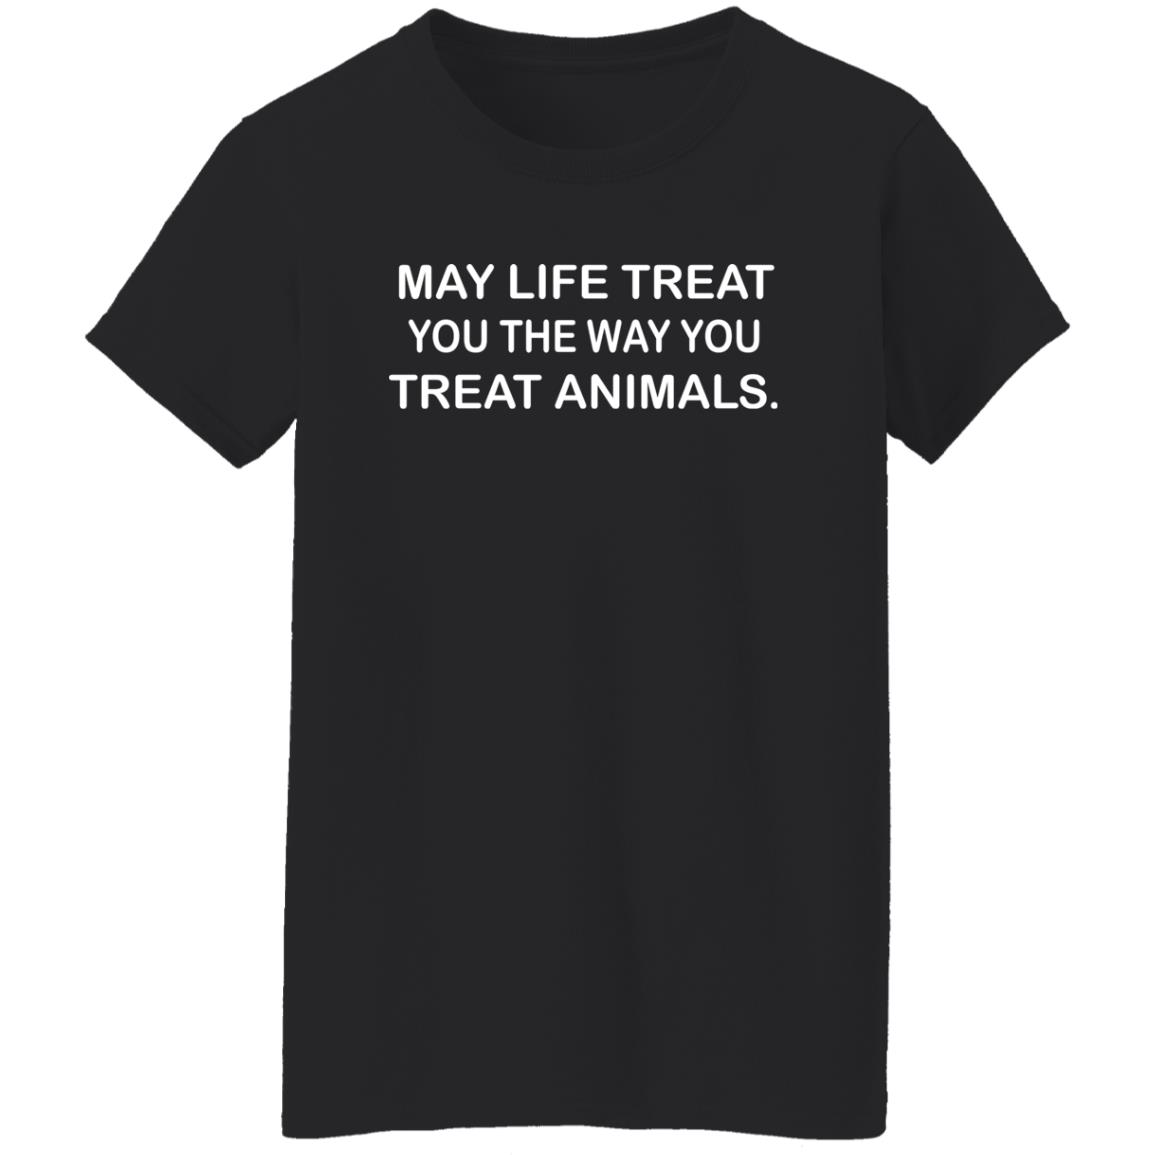 May life treat you the way you treat animals shirt - Bucktee.com